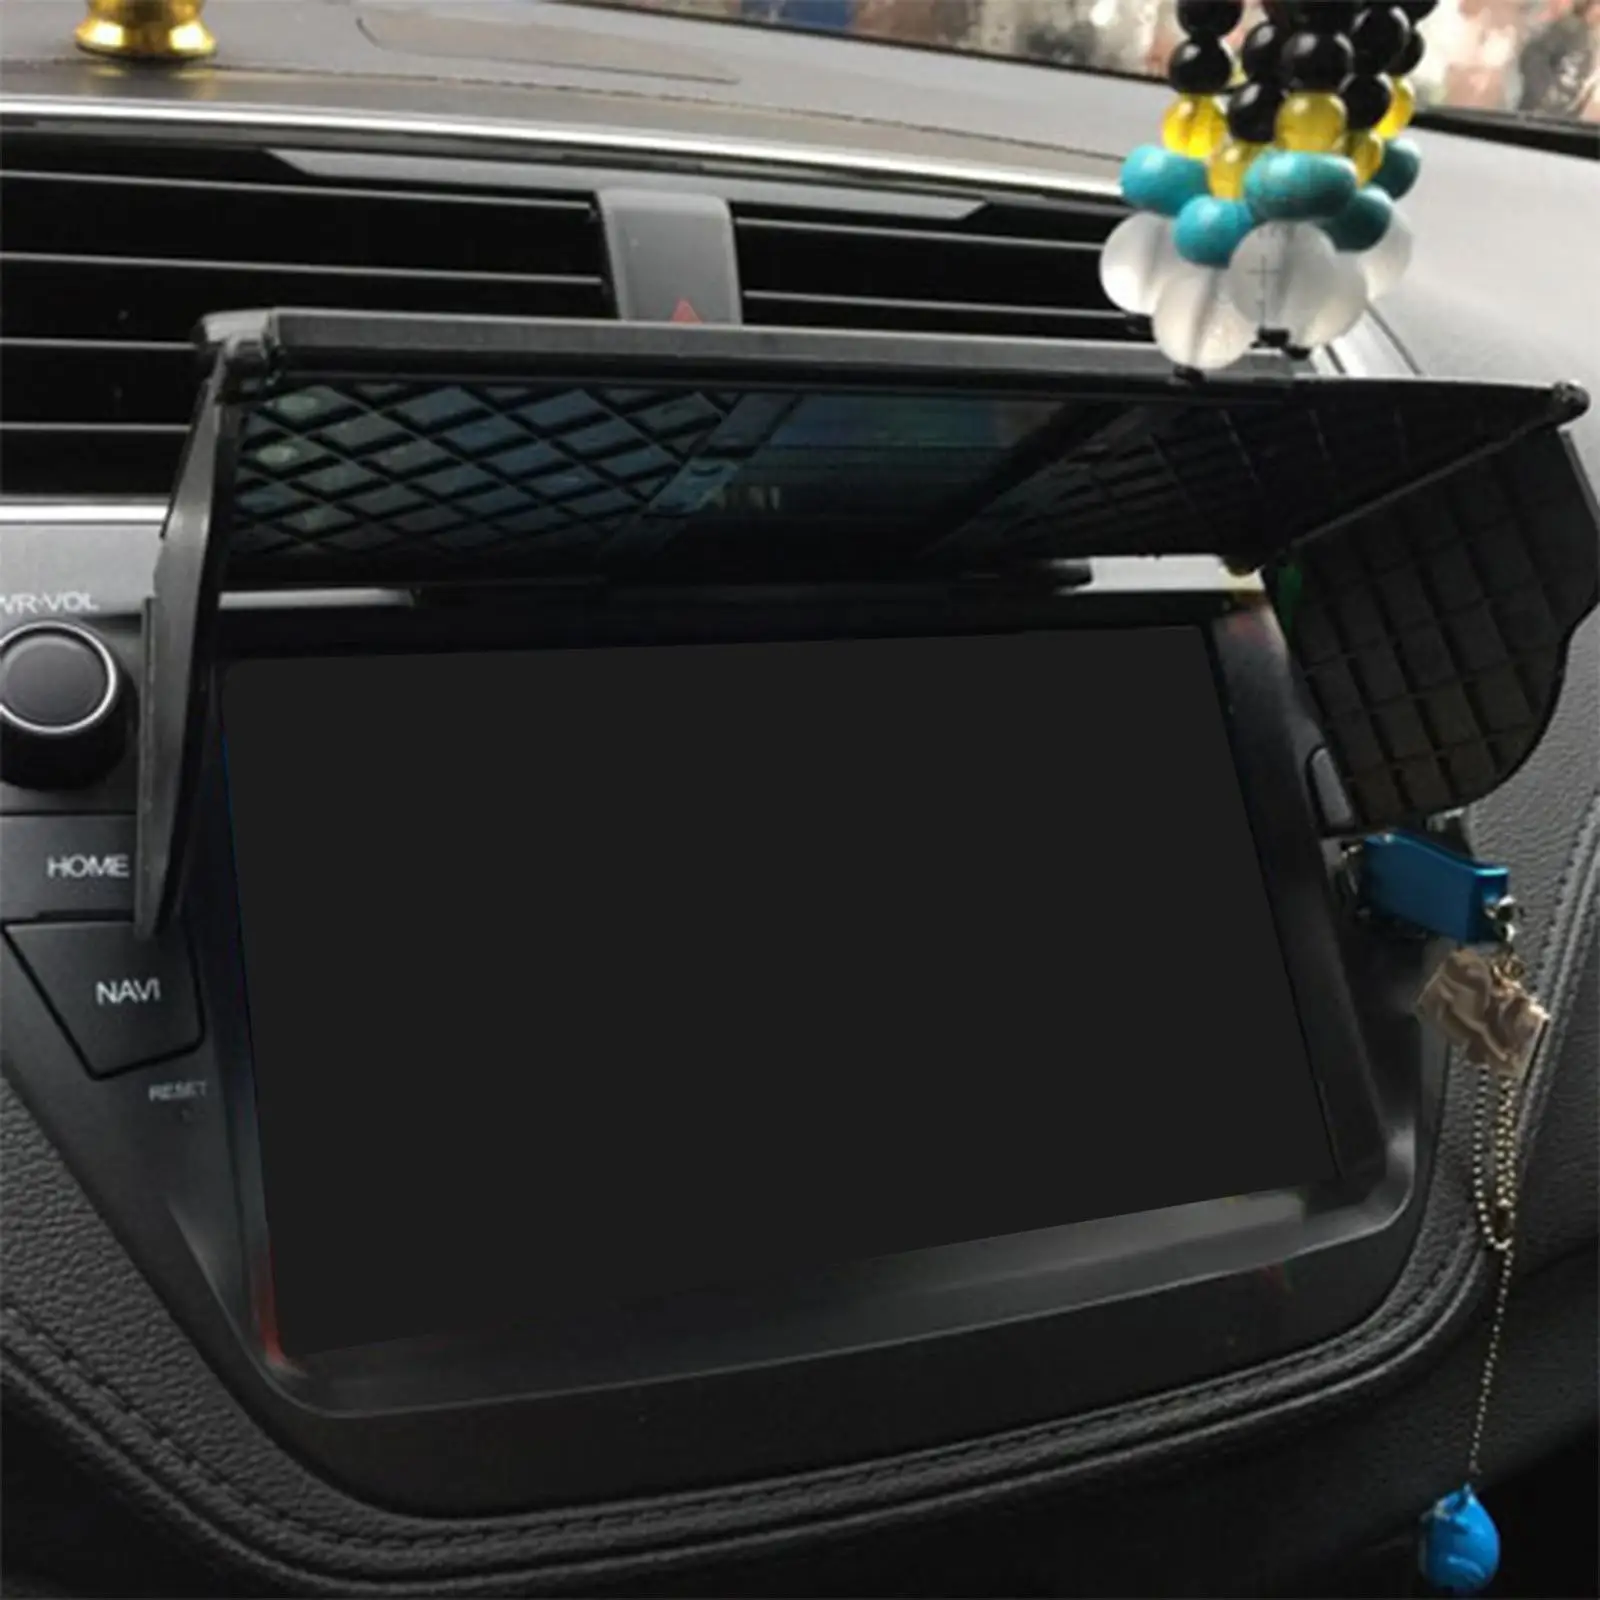 GPS Sunshade Vehicle Car Accessories Block Sunlight Anti Reflective Adjustable Visor Protector